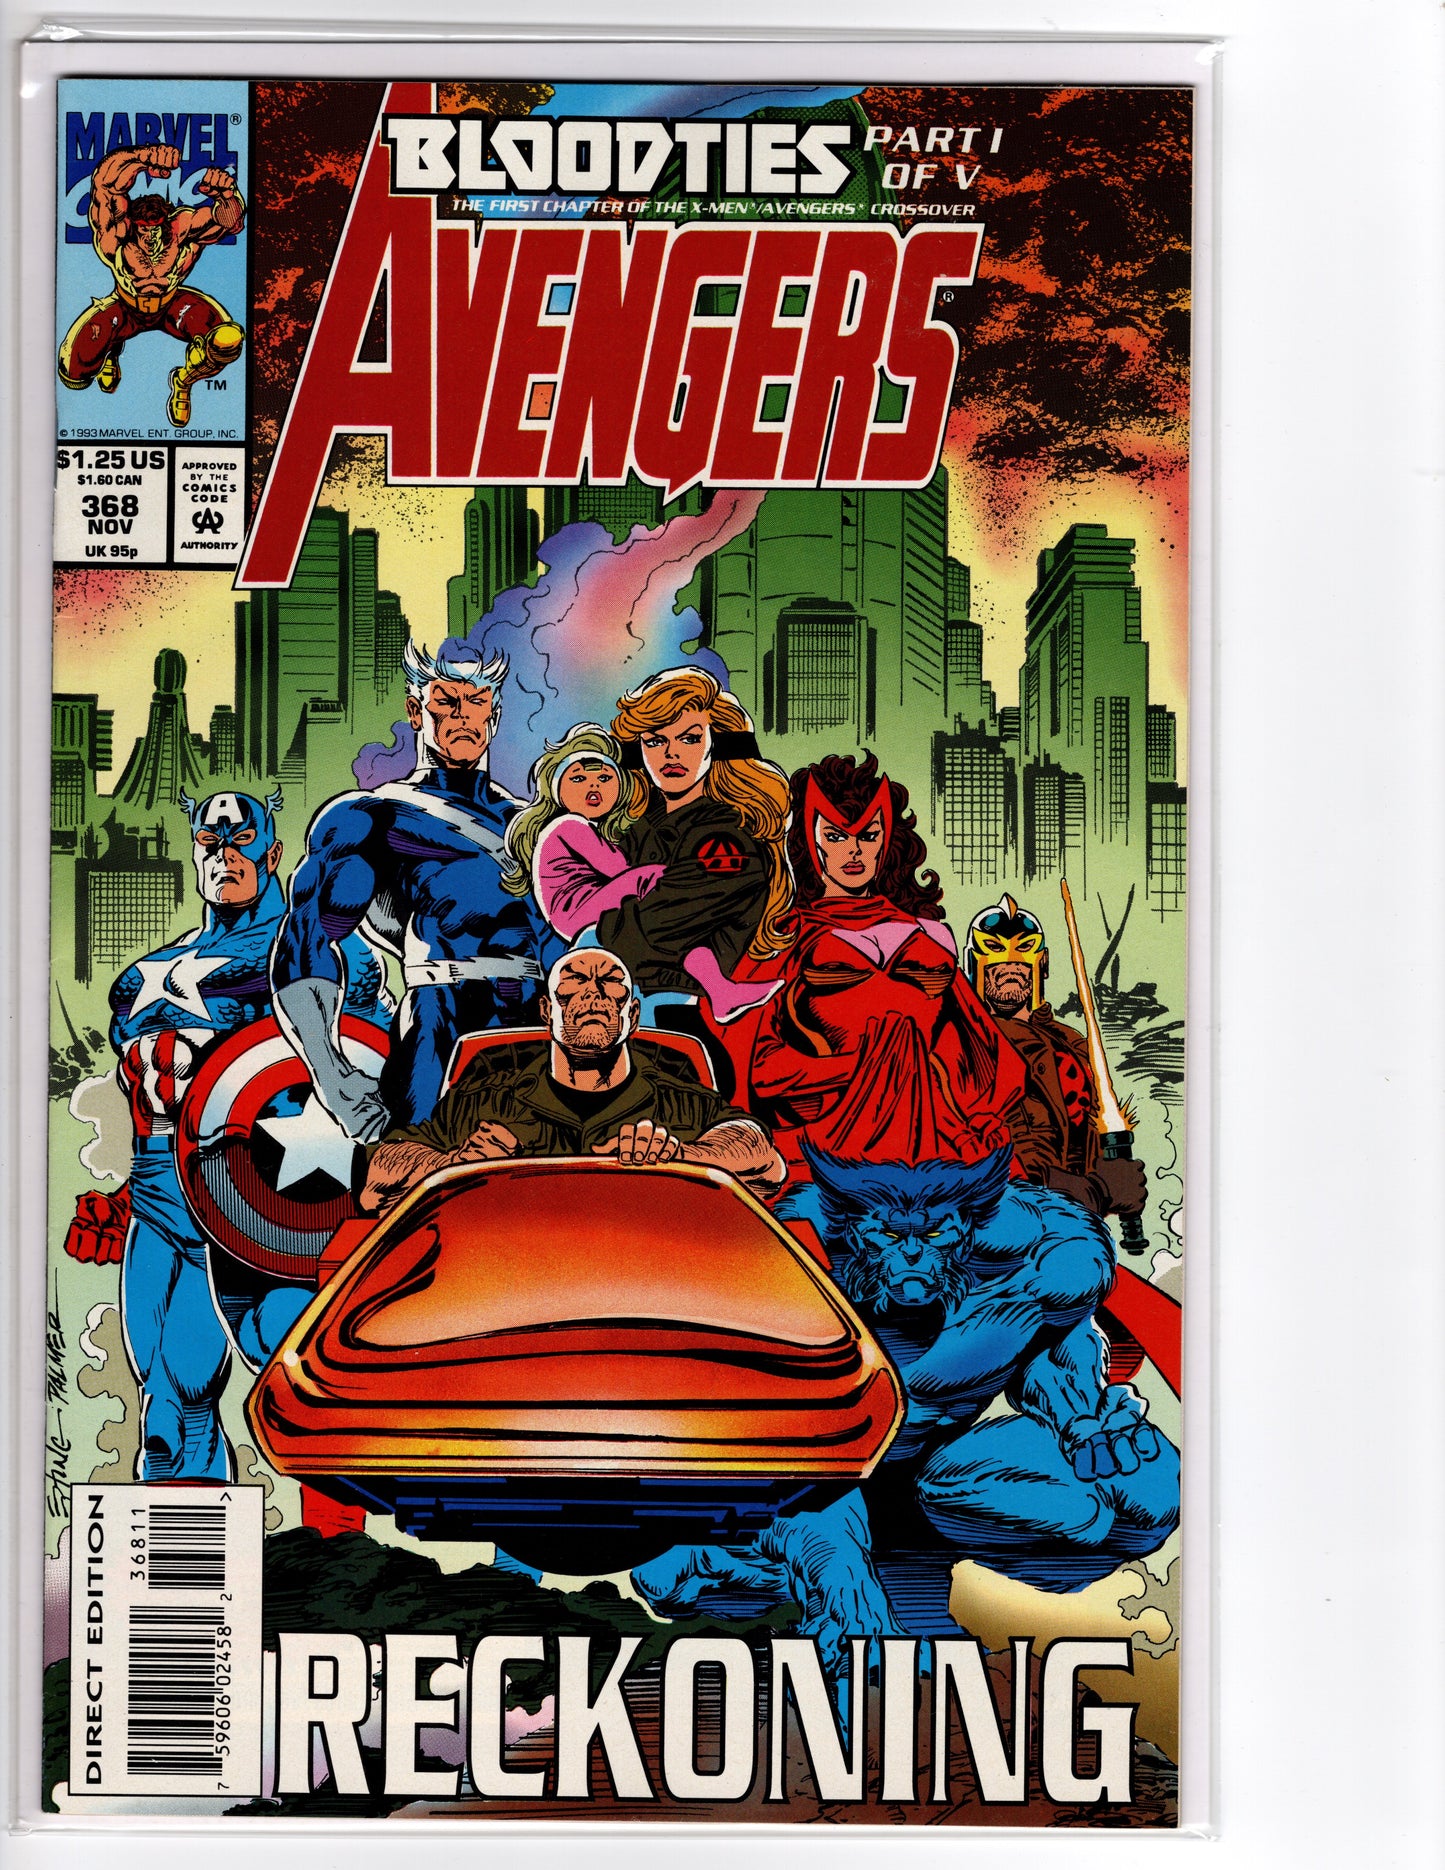 The Avengers No. 368